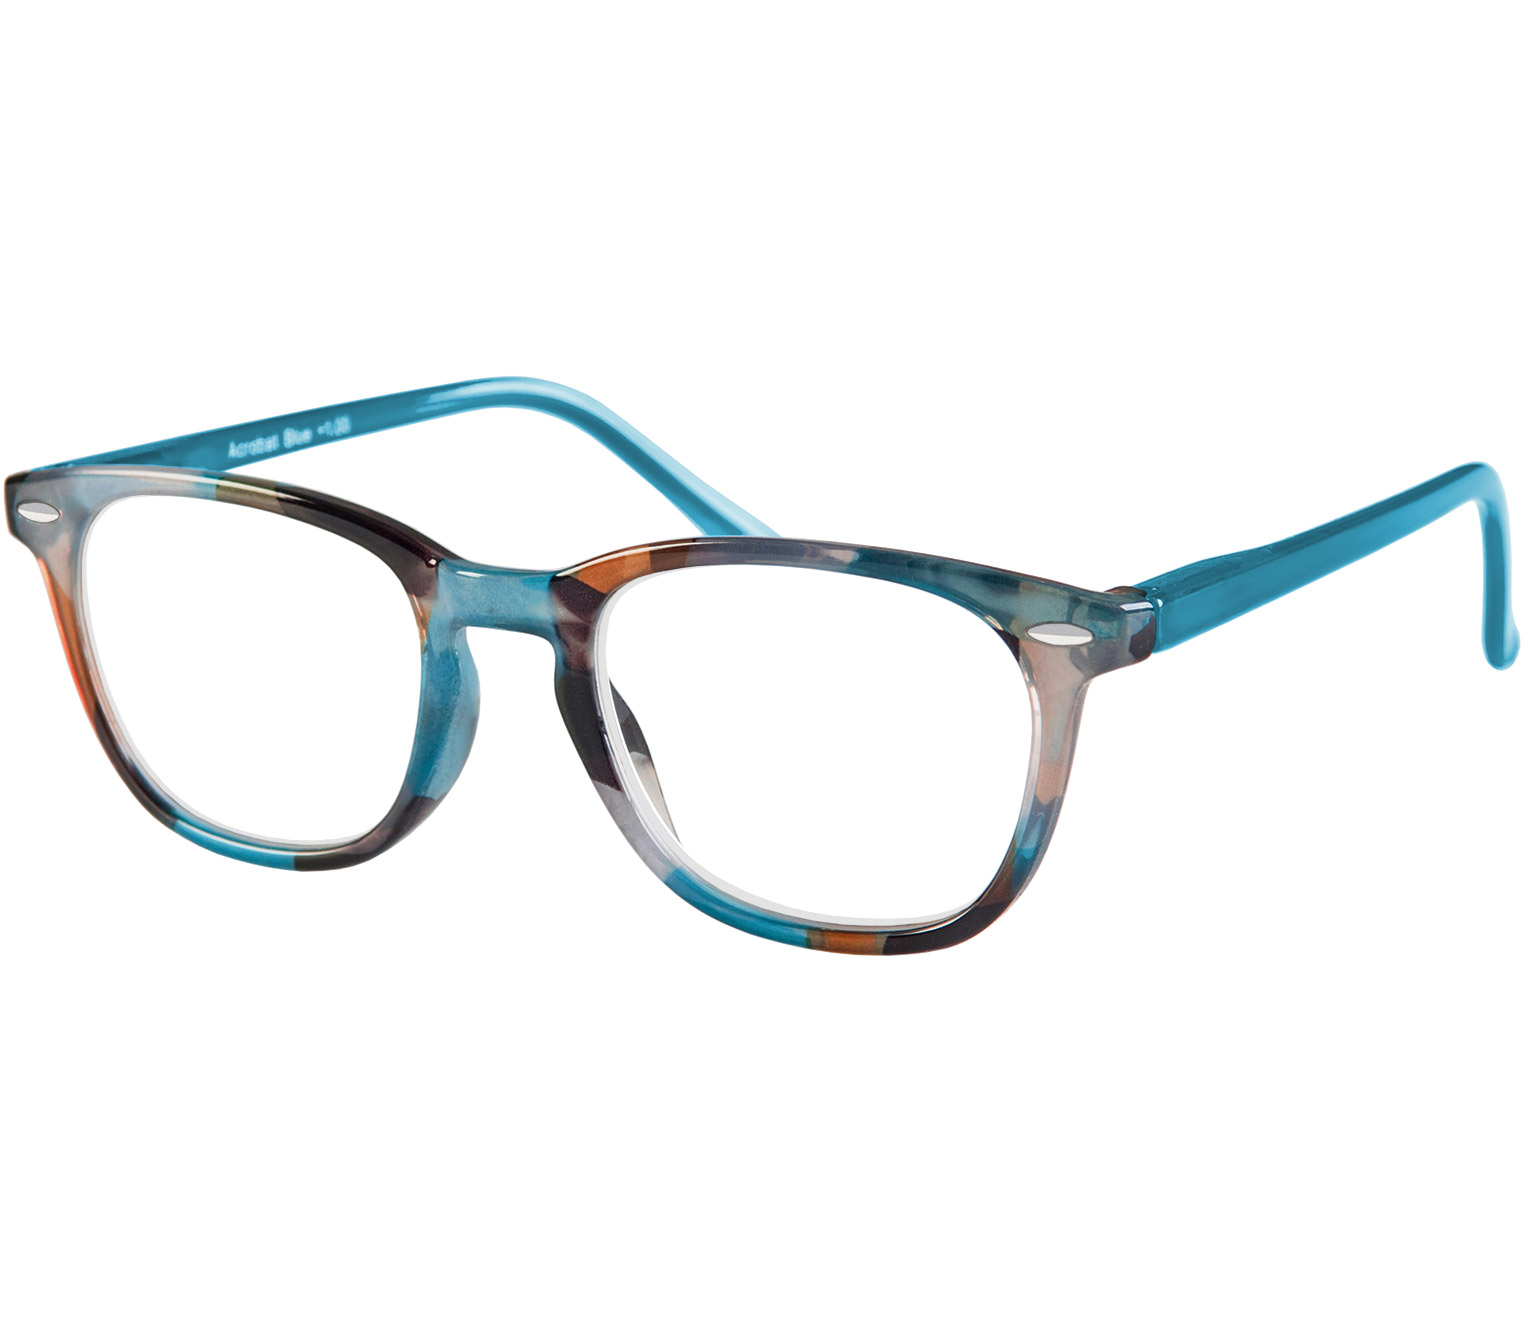 Main Image (Angle) - Acrobat (Blue) Retro Reading Glasses